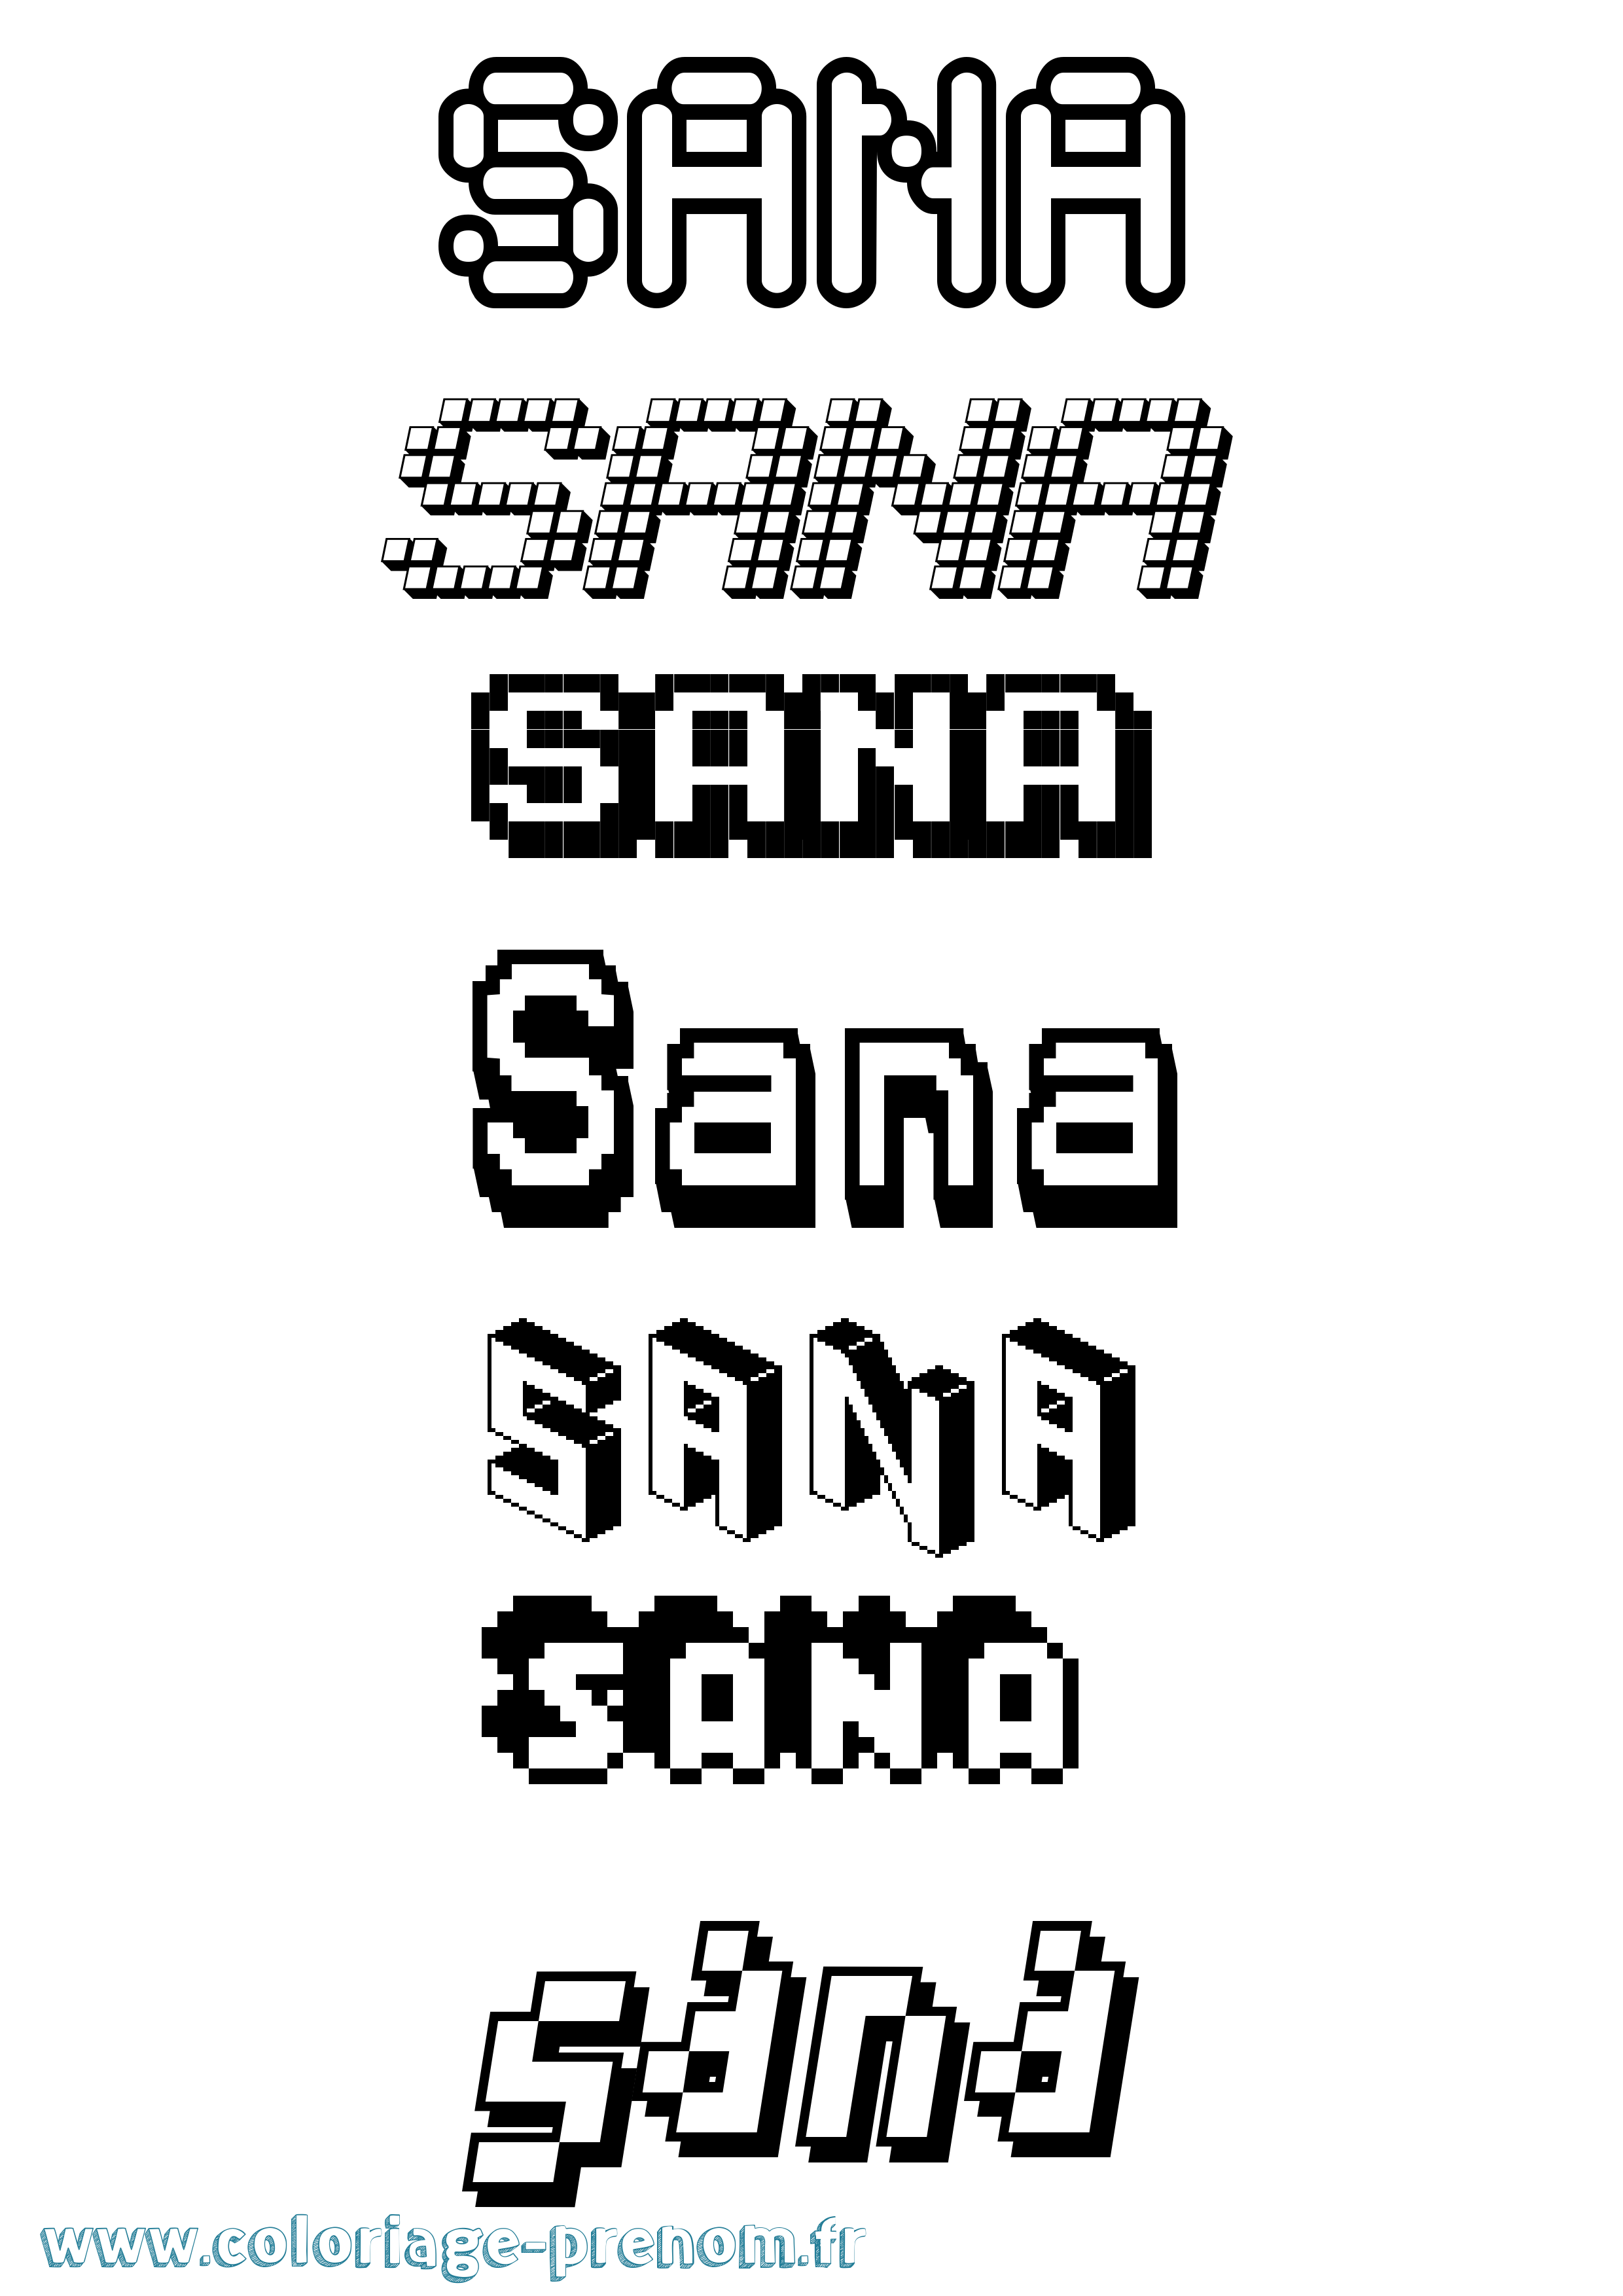 Coloriage prénom Sana Pixel